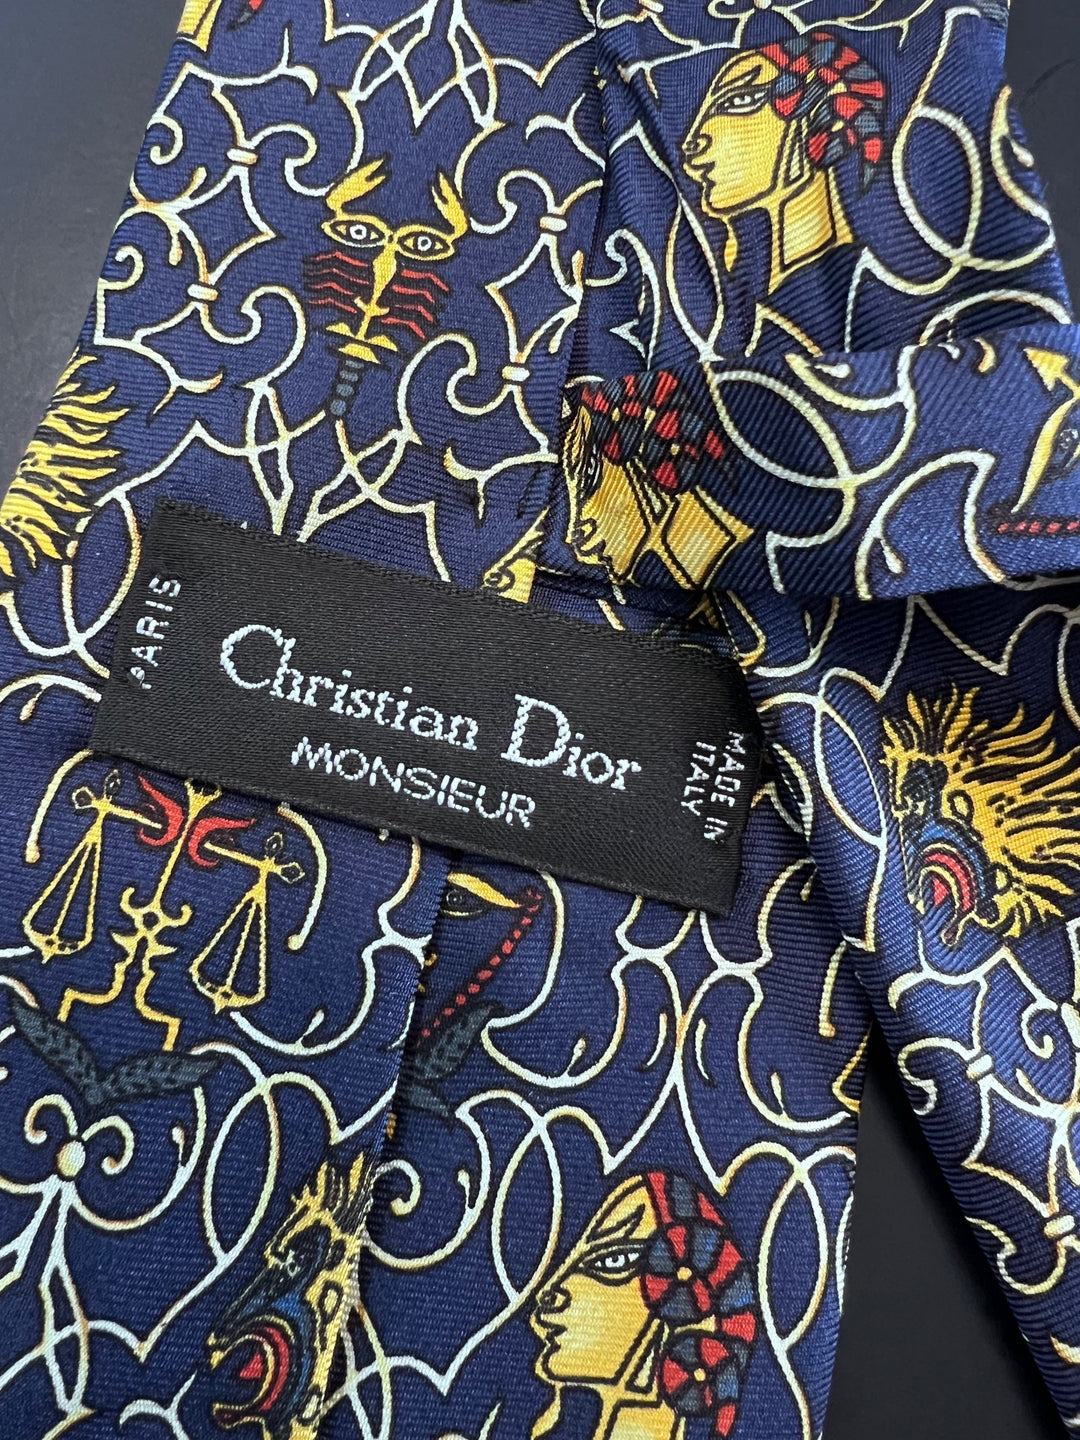 Christian Dior Silk Tie